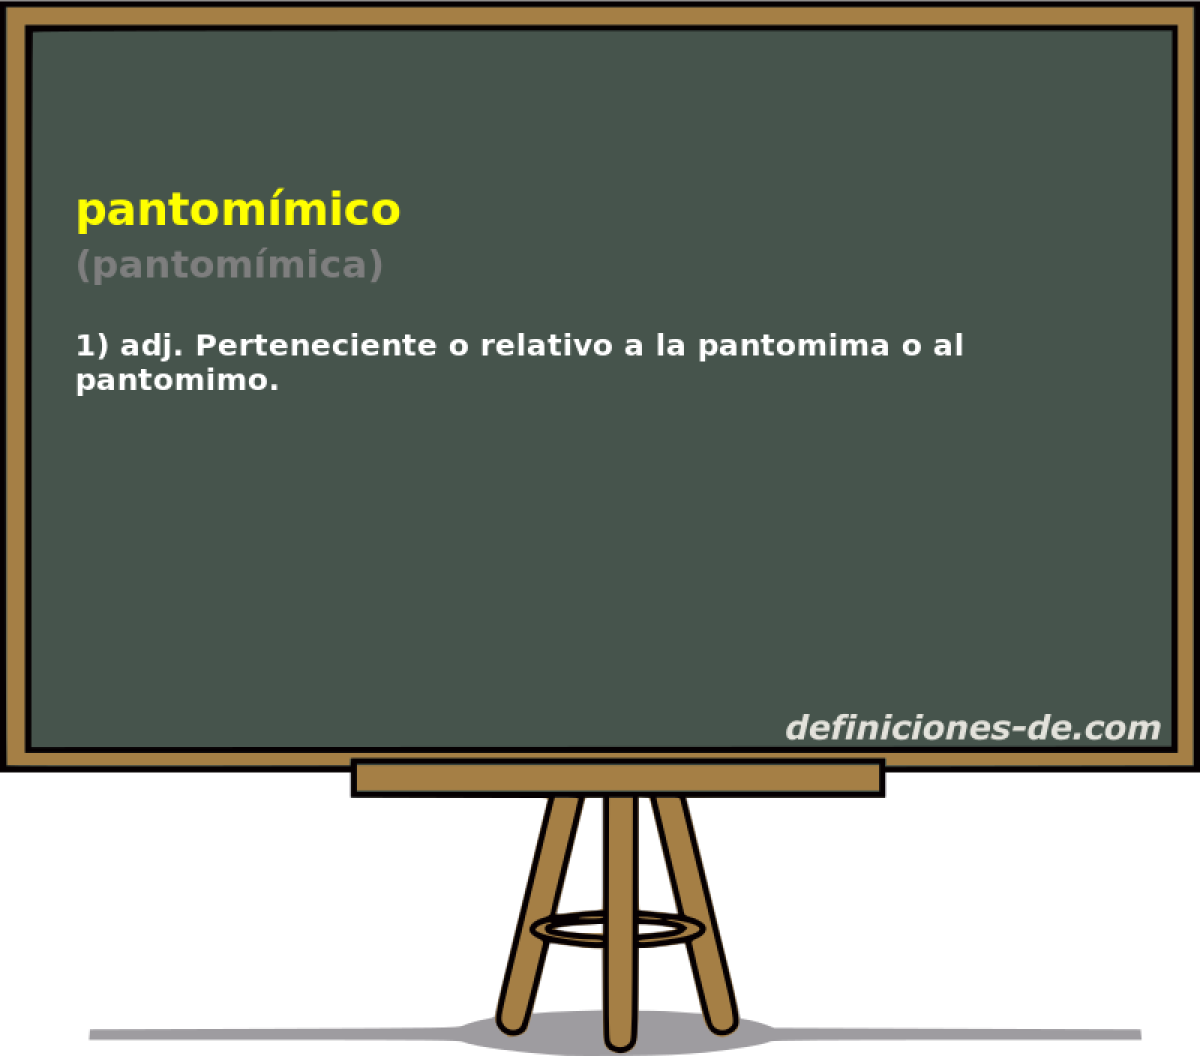 pantommico (pantommica)